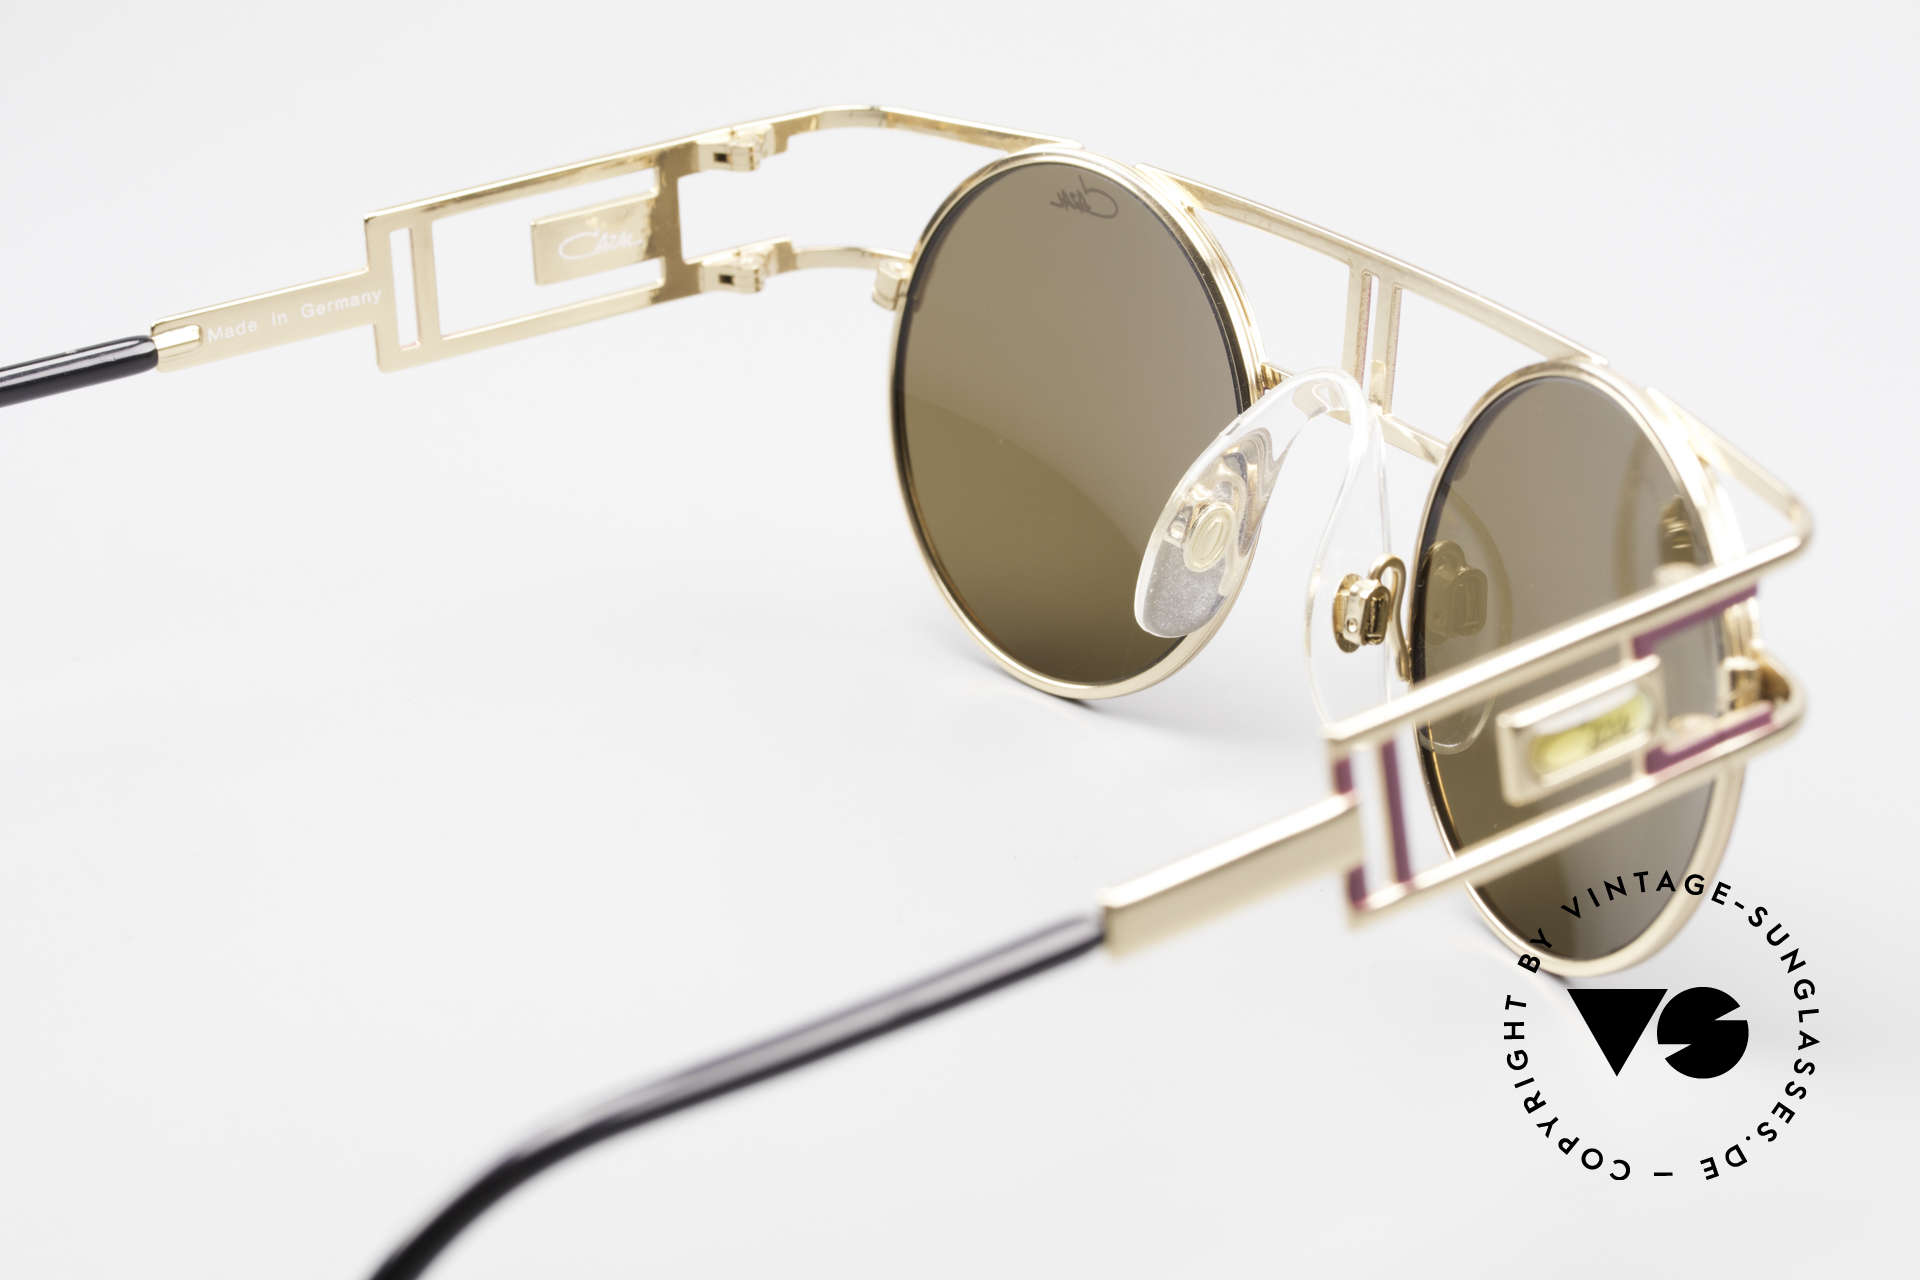 Cazal 958 90's Eurythmics Sunglasses, Size: medium, Made for Men and Women